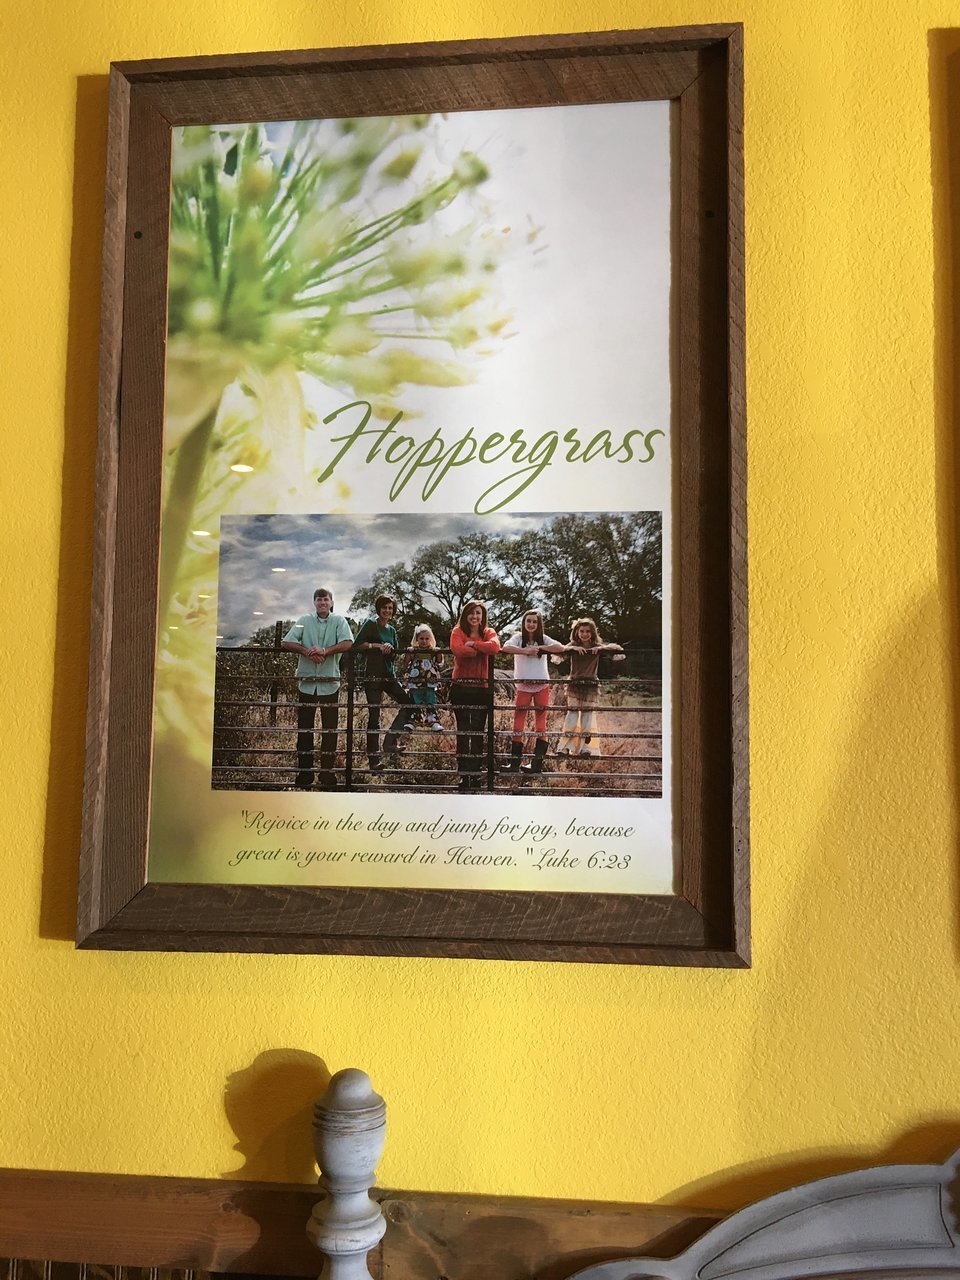 Hoppergrass Restaurant